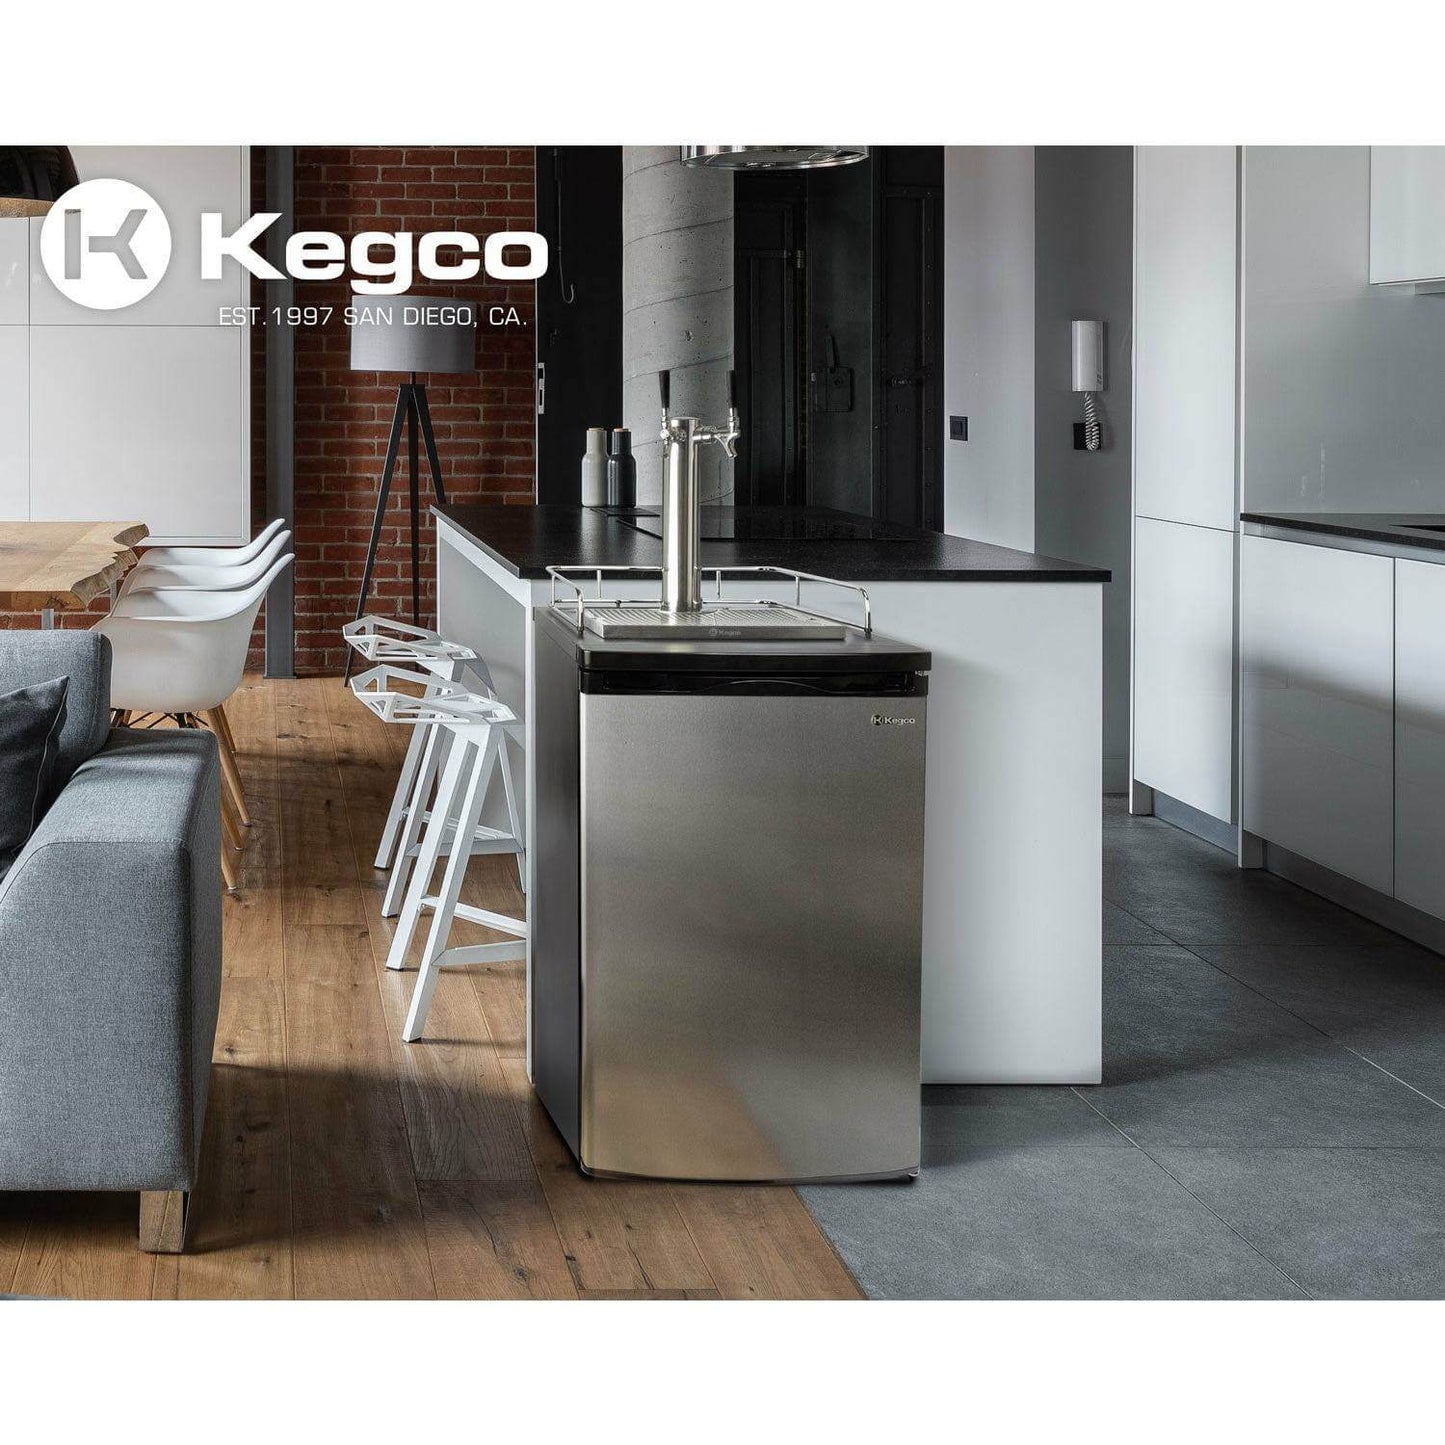 Kegco 20" Wide Dual Tap Stainless Steel Kegerator